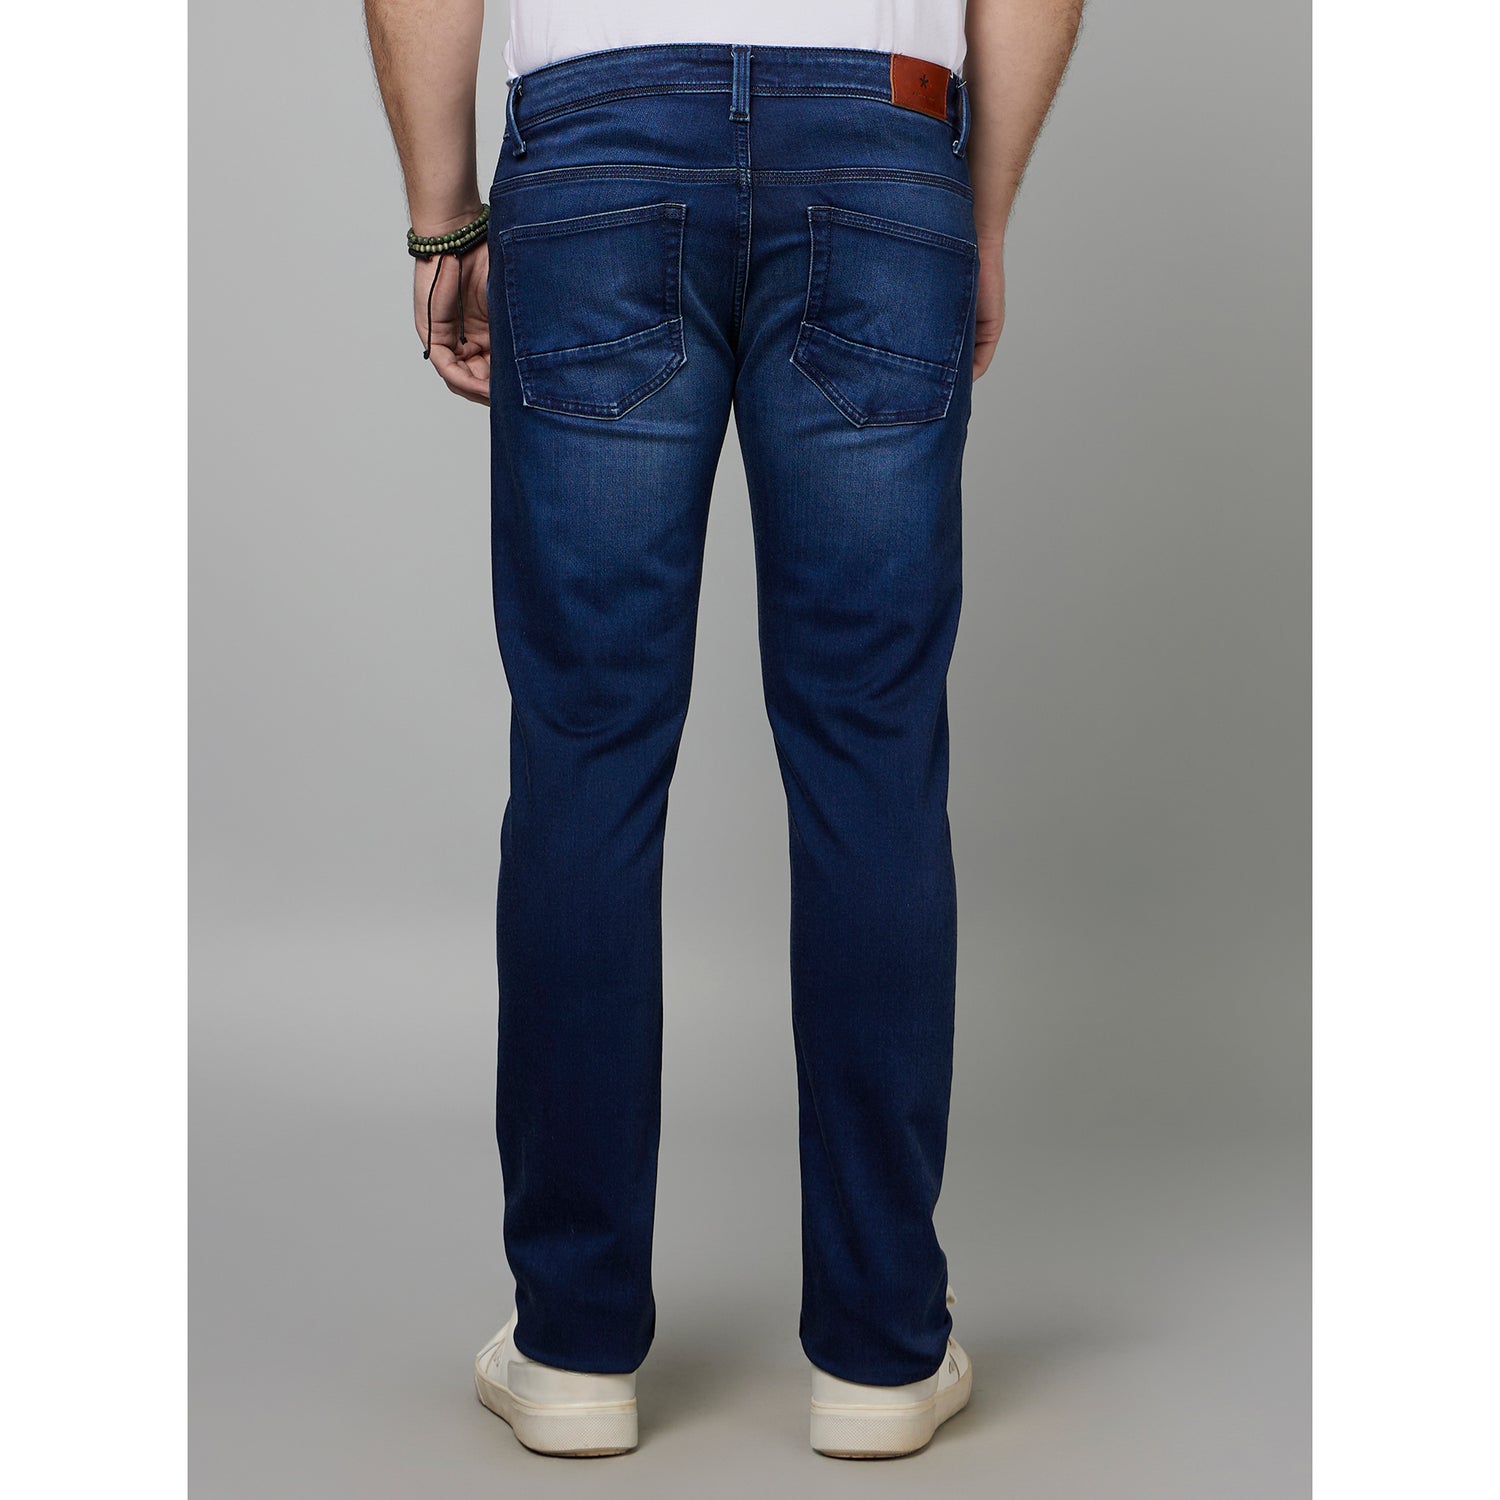 Navy Blue Slim Fit Clean Look Light Fade Jeans (FOMODALSTL)